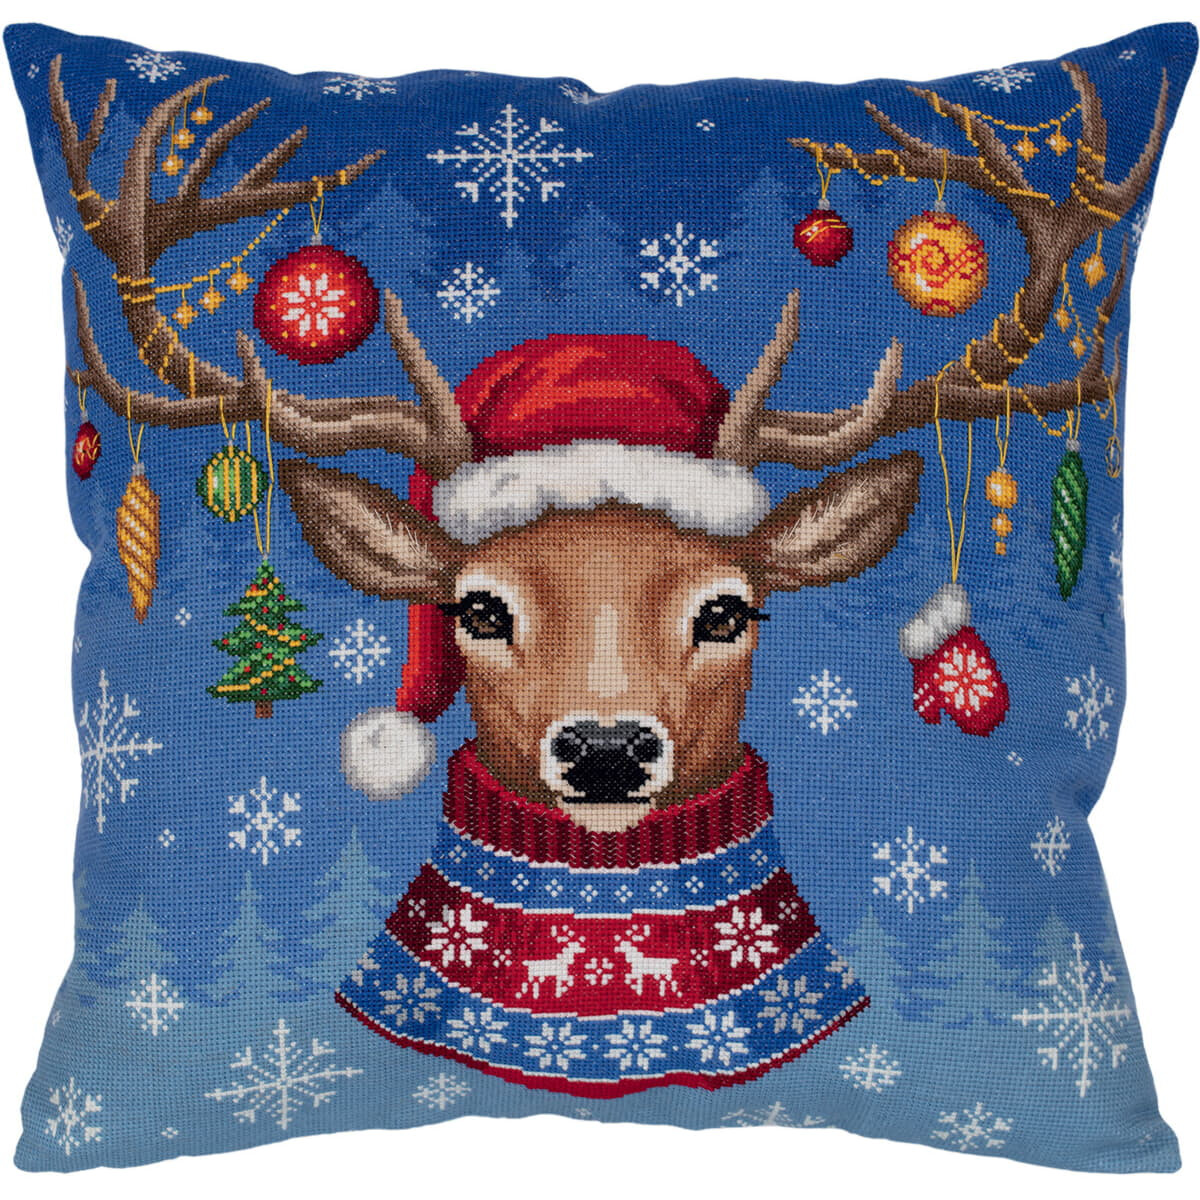 Panna counted cross stitch cushion kit "Christmas...